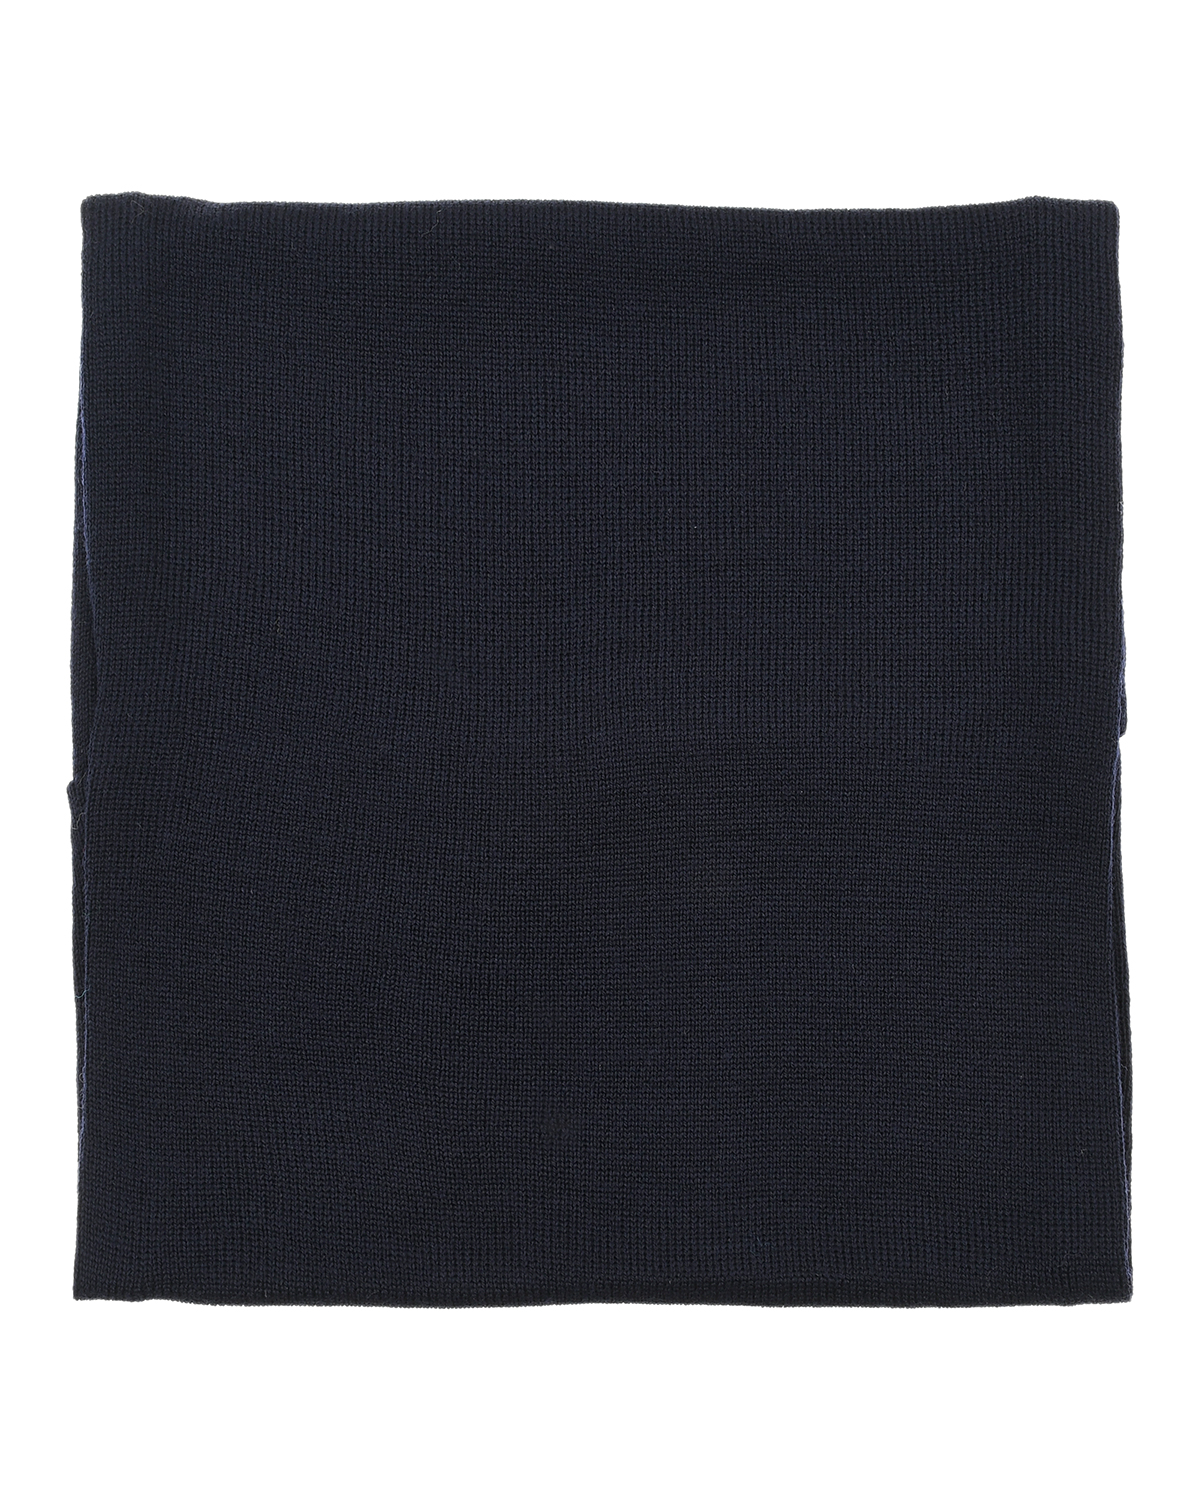 Темно-синий шарф-ворот, 25x27 см Catya детское, размер unica - фото 2